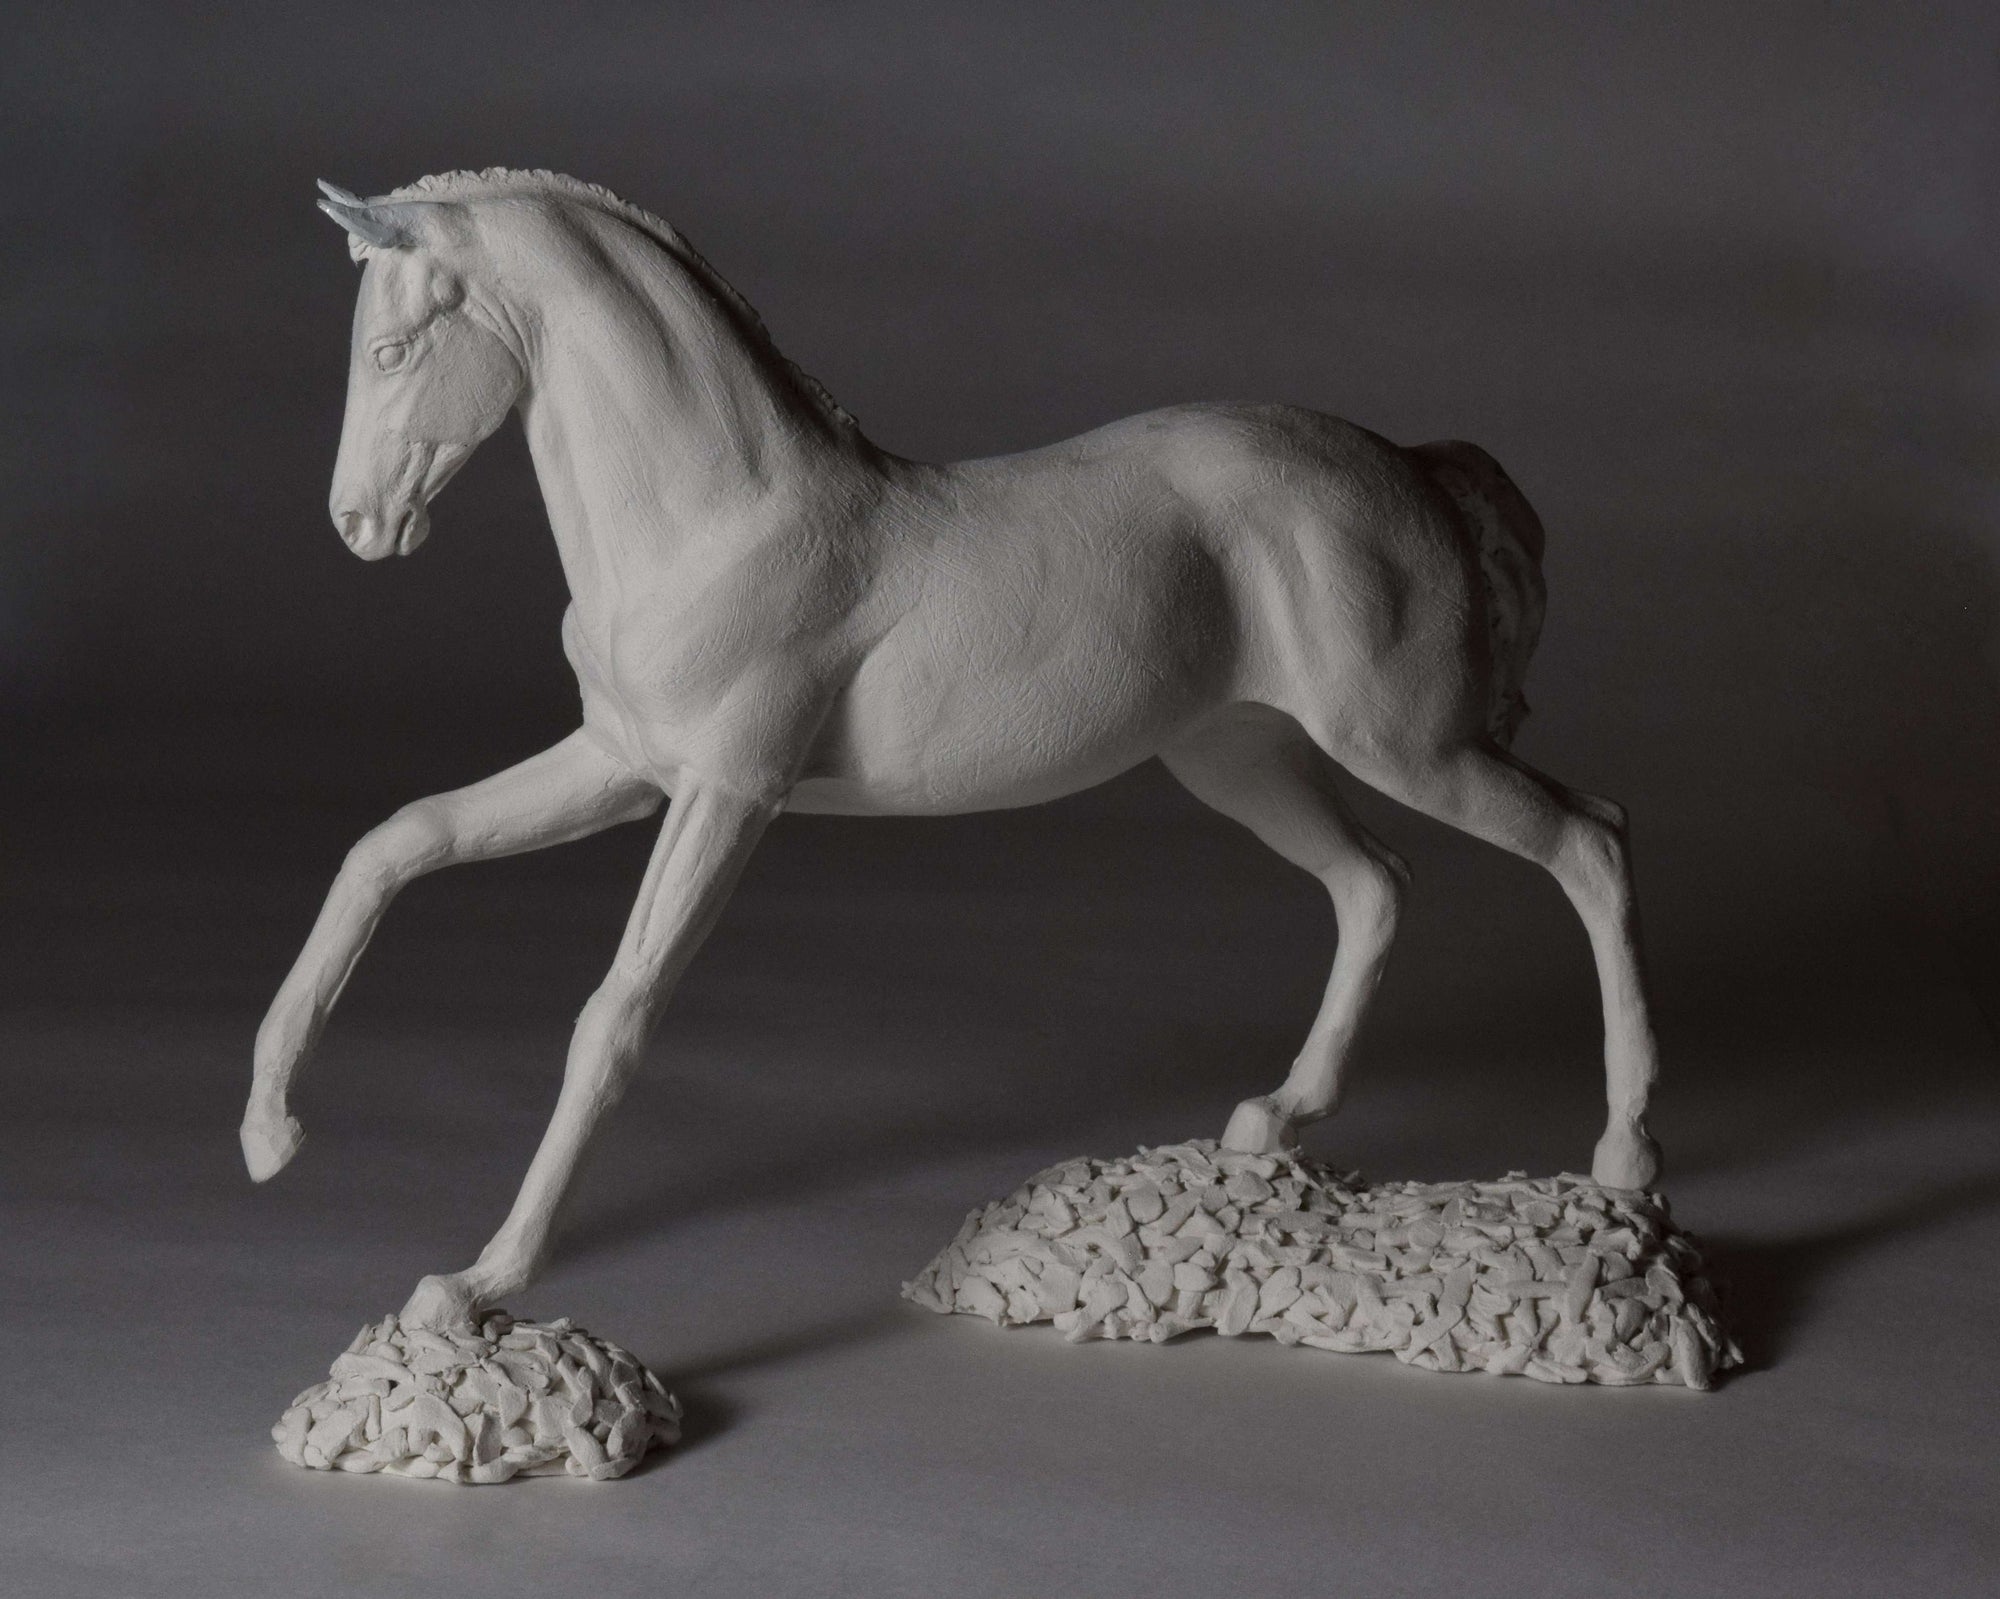 Sculpting Horses in Air Dry Clay Book